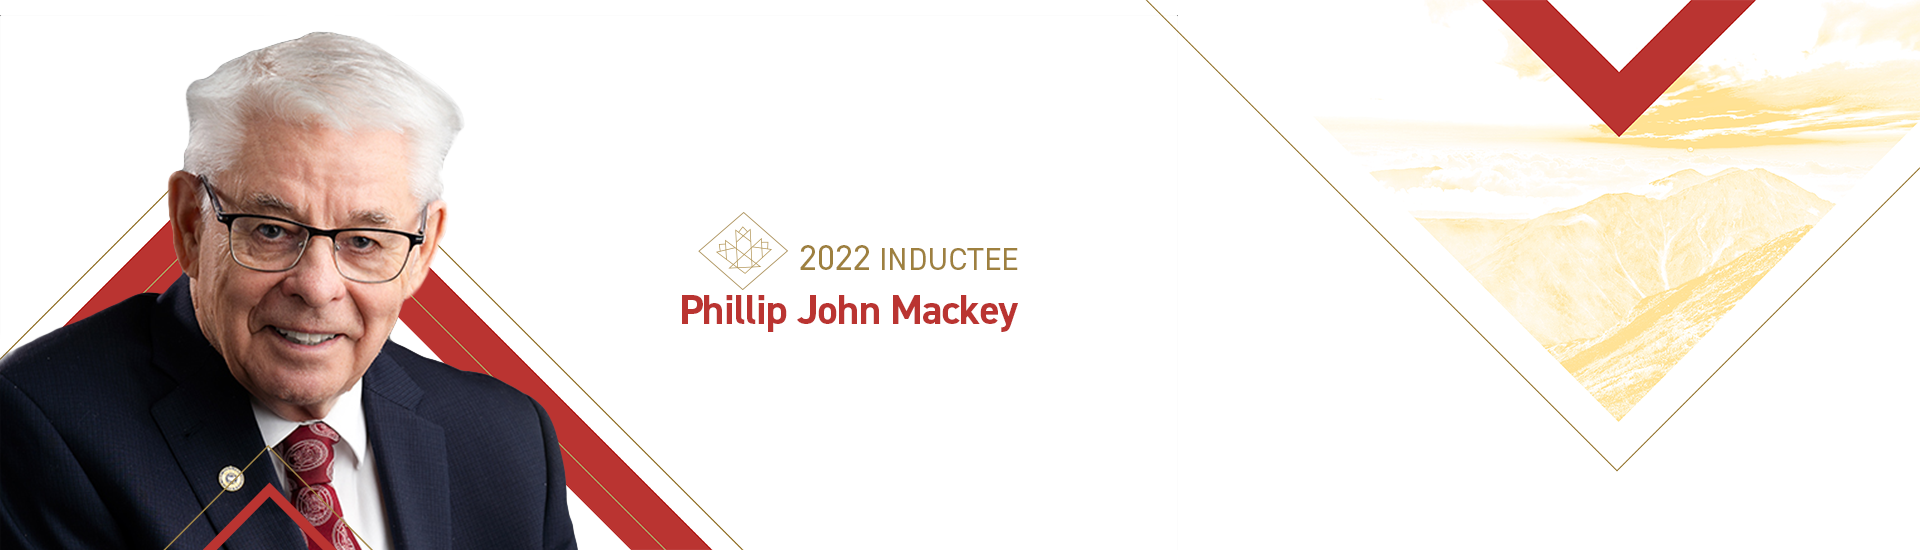 Phillip John Mackey (b.1941)